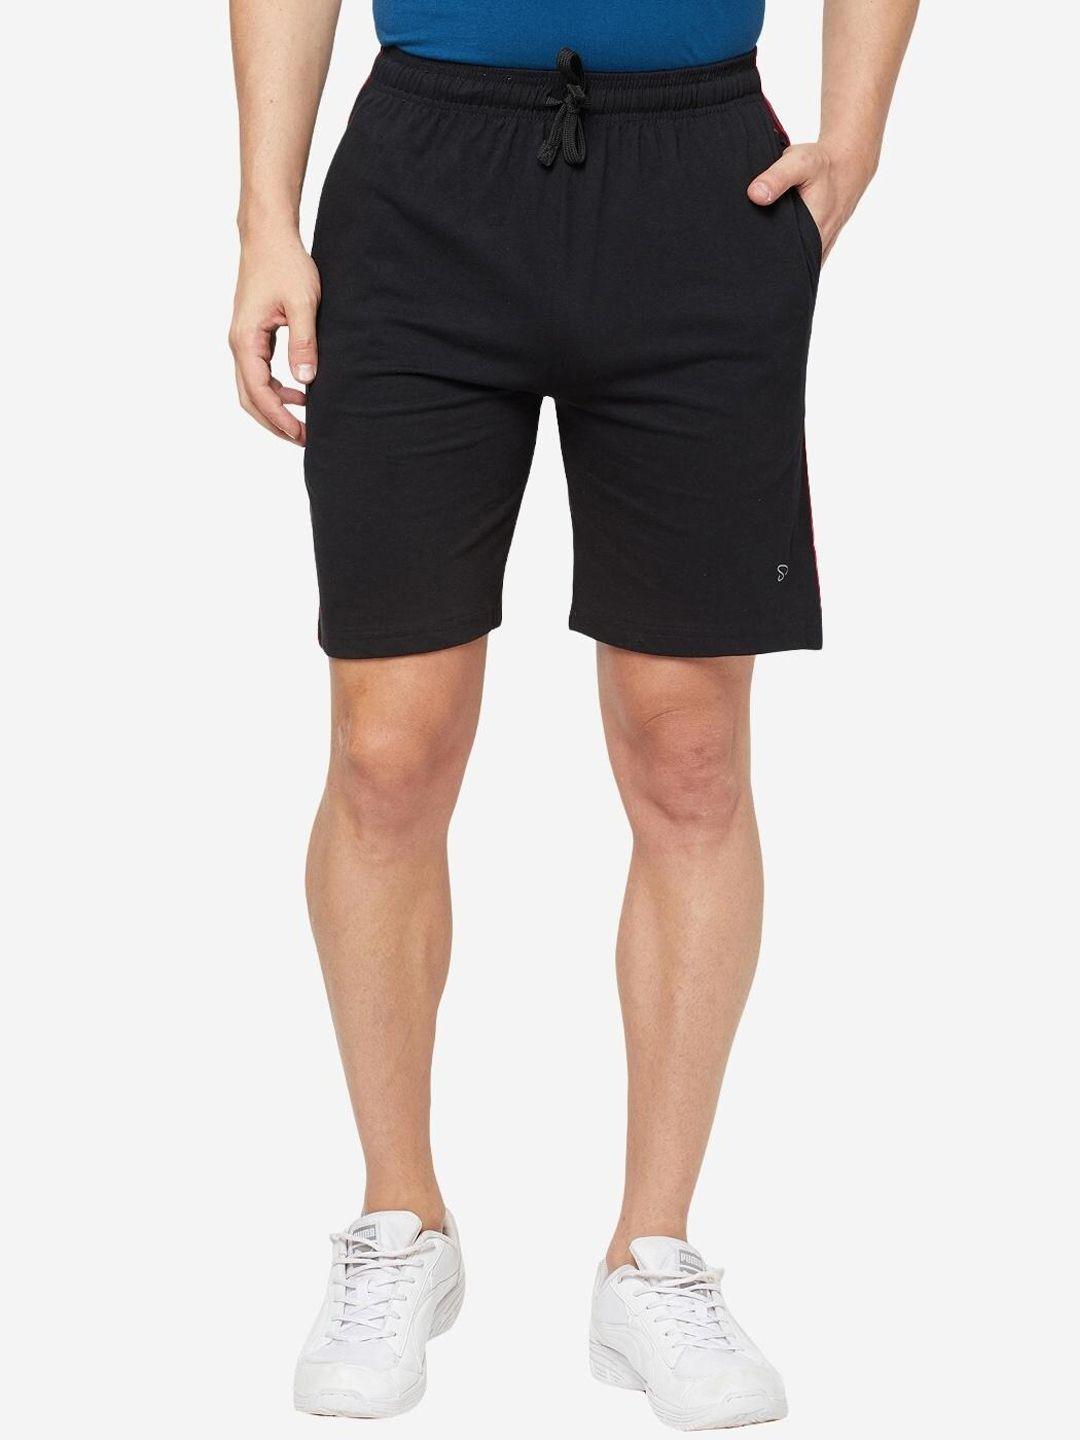 sporto men regular fit cotton sport shorts